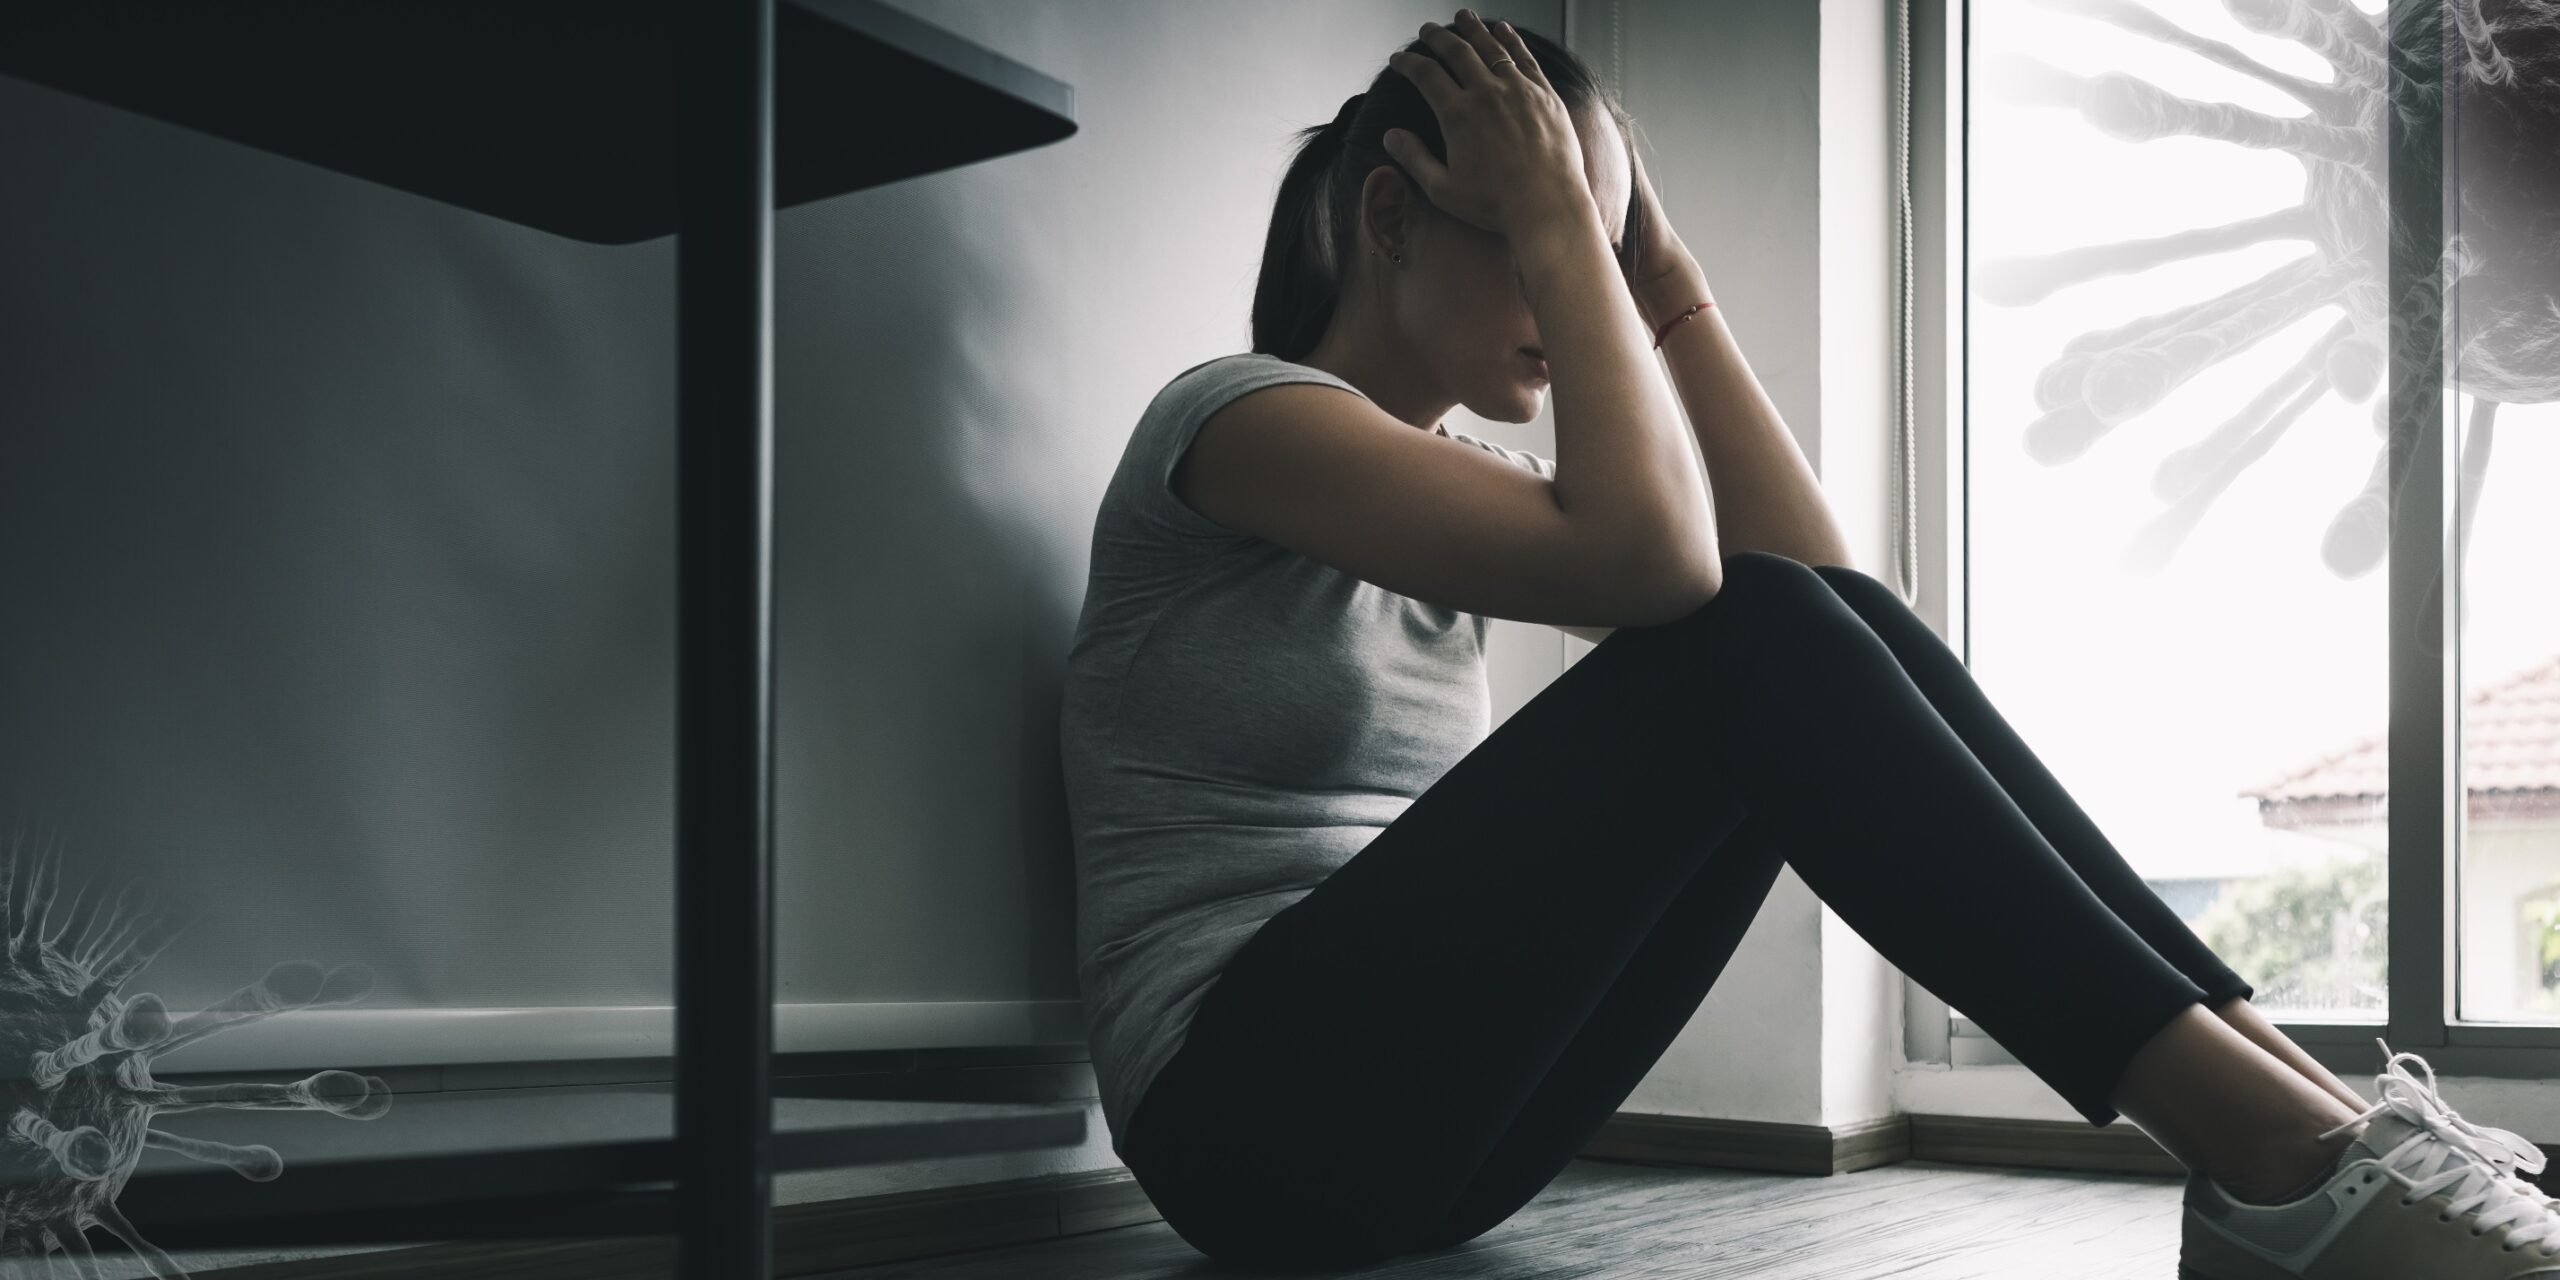 Dejected?  Seven tips against depression